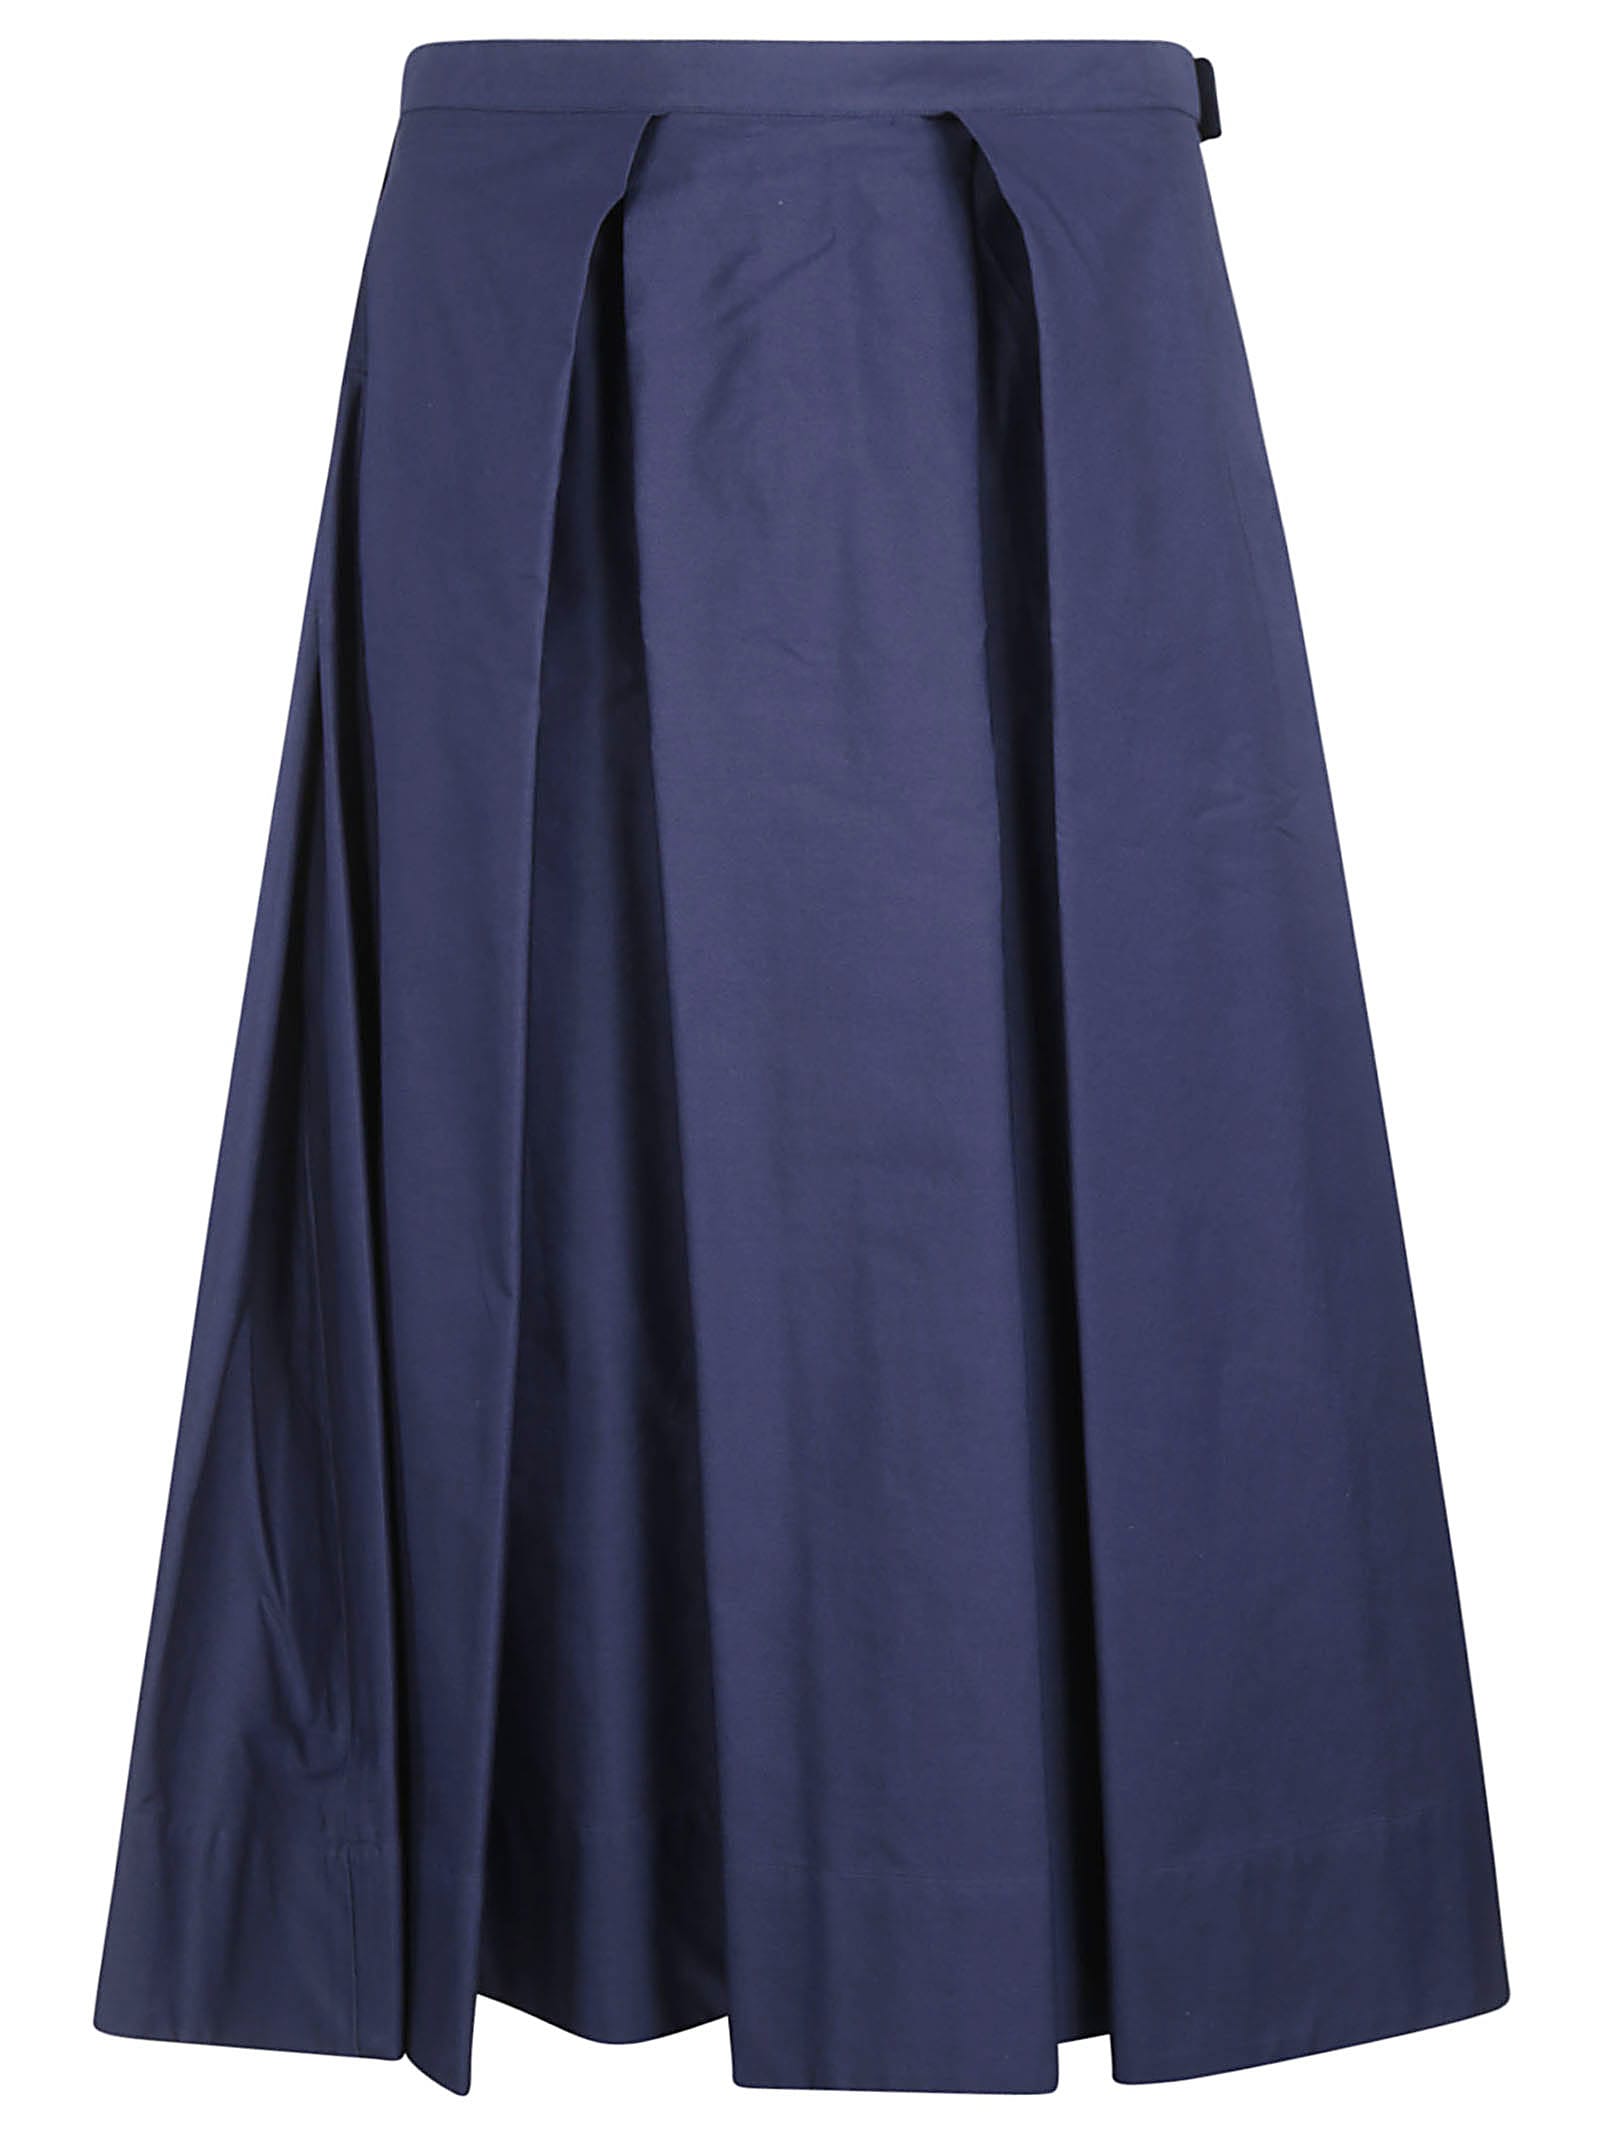 Marni Flared Plain Skirt